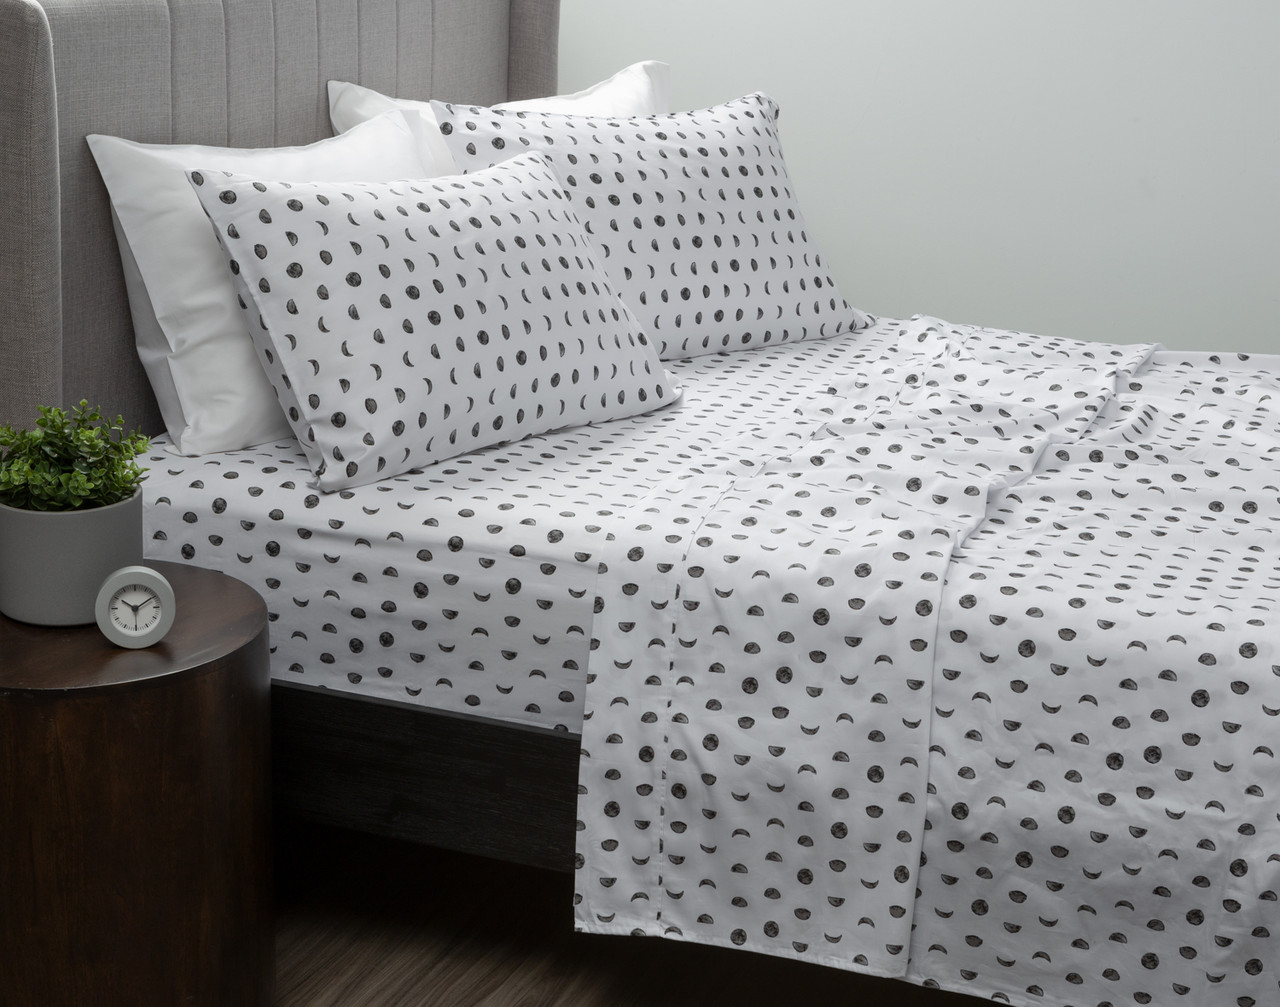 Lunar Organic Cotton Sheet Set draped over a bed.